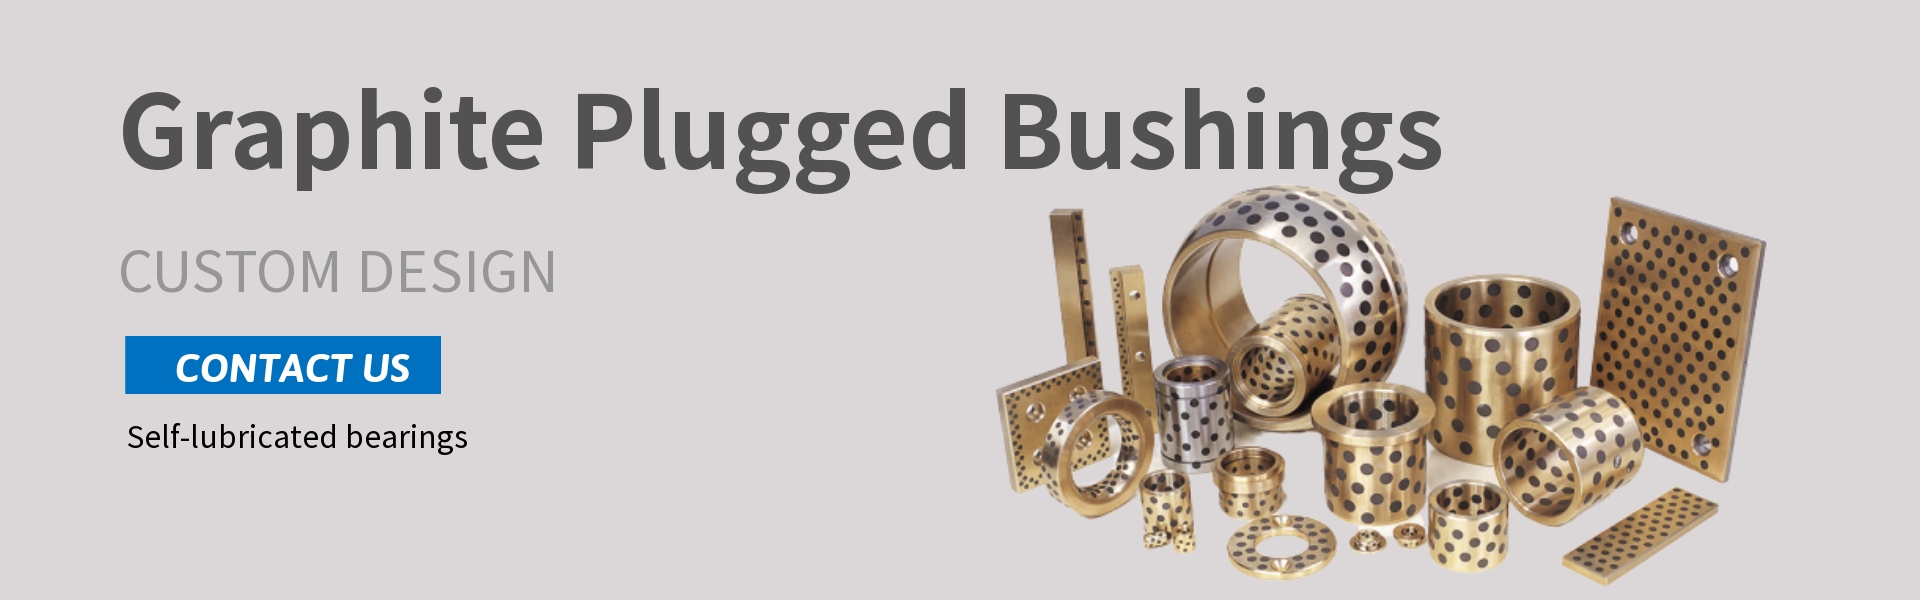 Manganese bronze bushing packaging machinery Graphite Plugged Bushings 